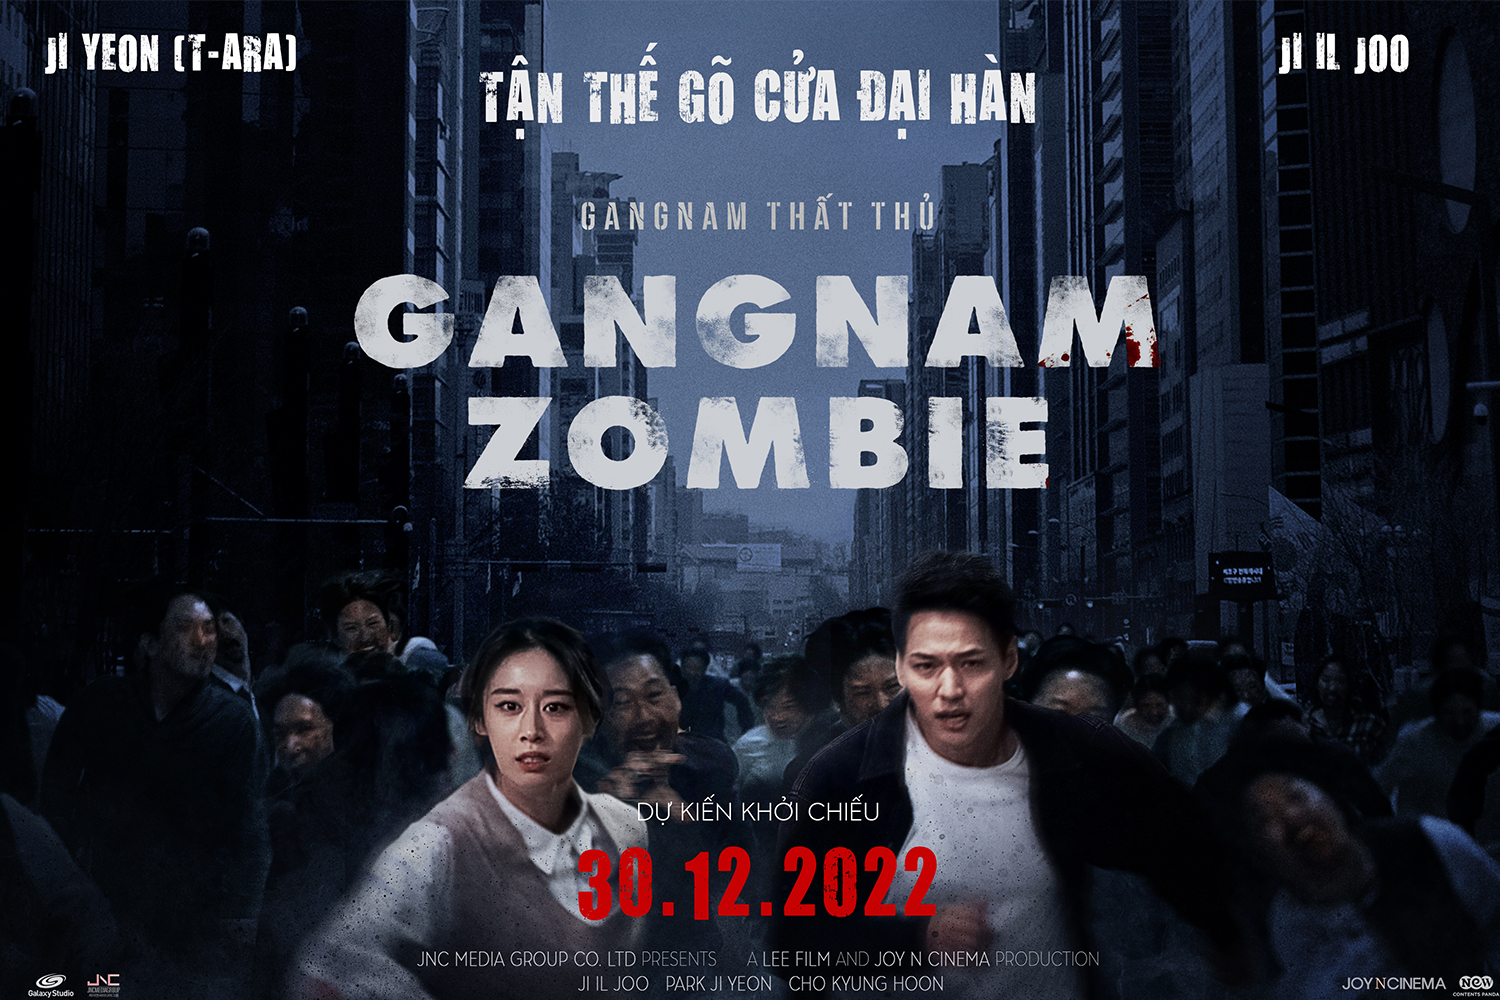 Harper's Bazaar_Jiyeon T ARA phim chiếu rạp Gangnam Zombie_04